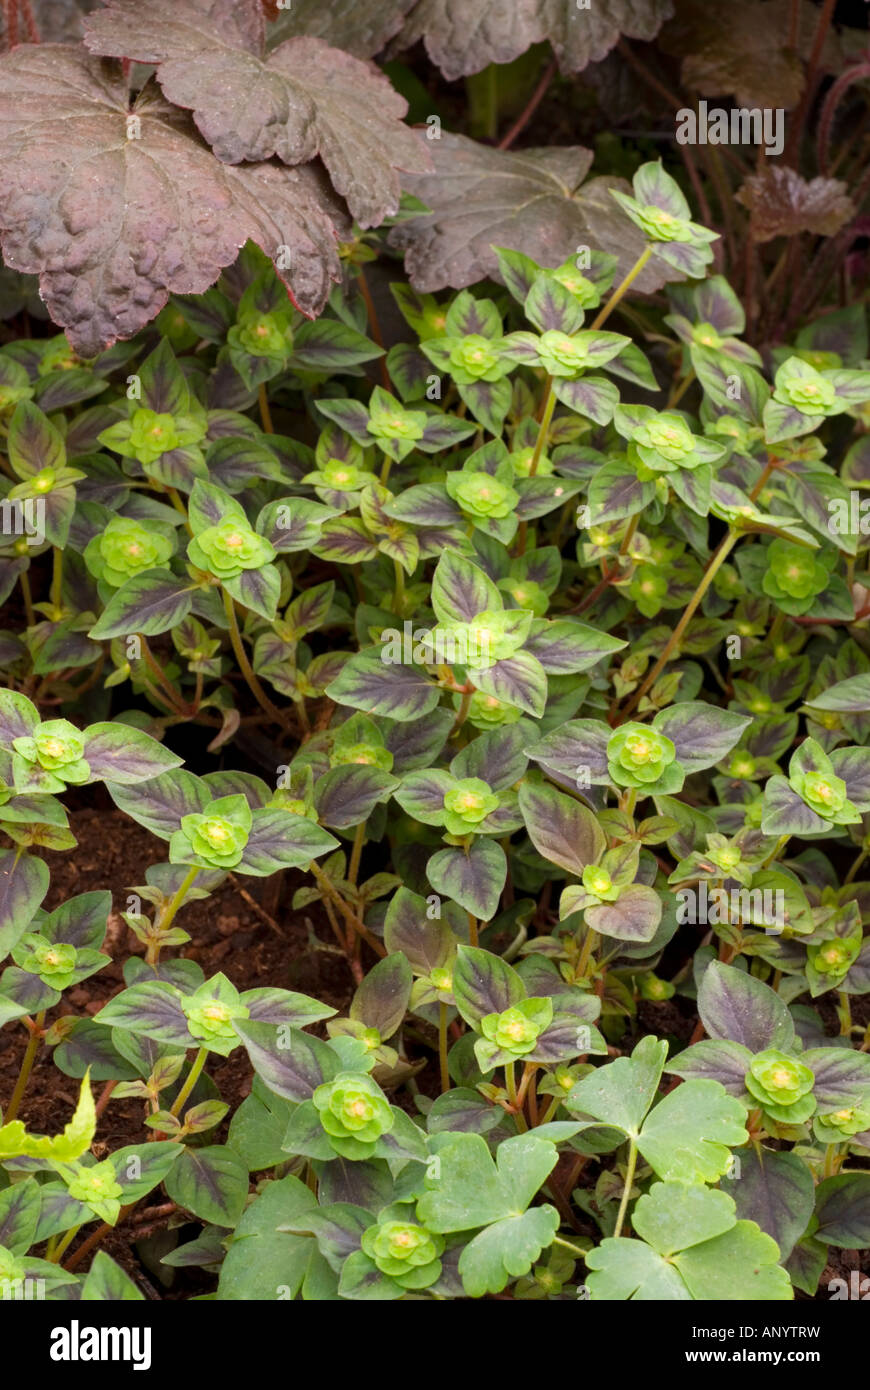 Lysimachia congestiflora ‘Persian Carpet’ (Persian Carpet Moneywort) Ornamental foliage leaves. Good background image. Stock Photo